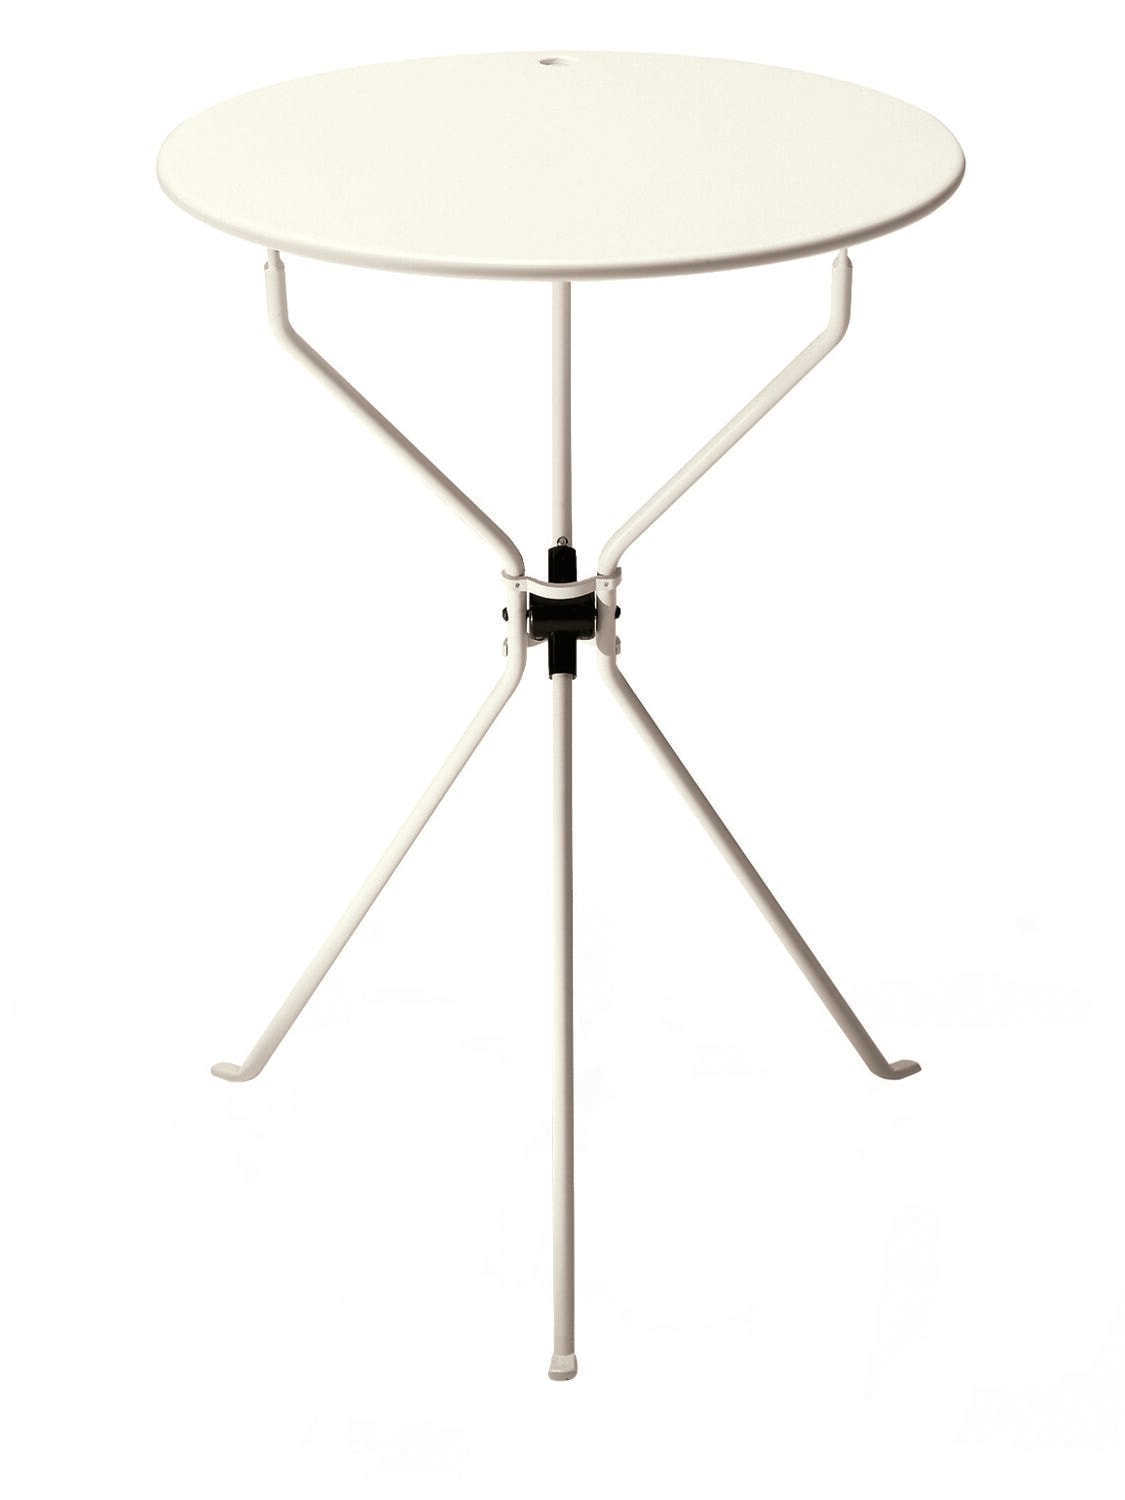 Zanotta Cumano Foldable Table In White